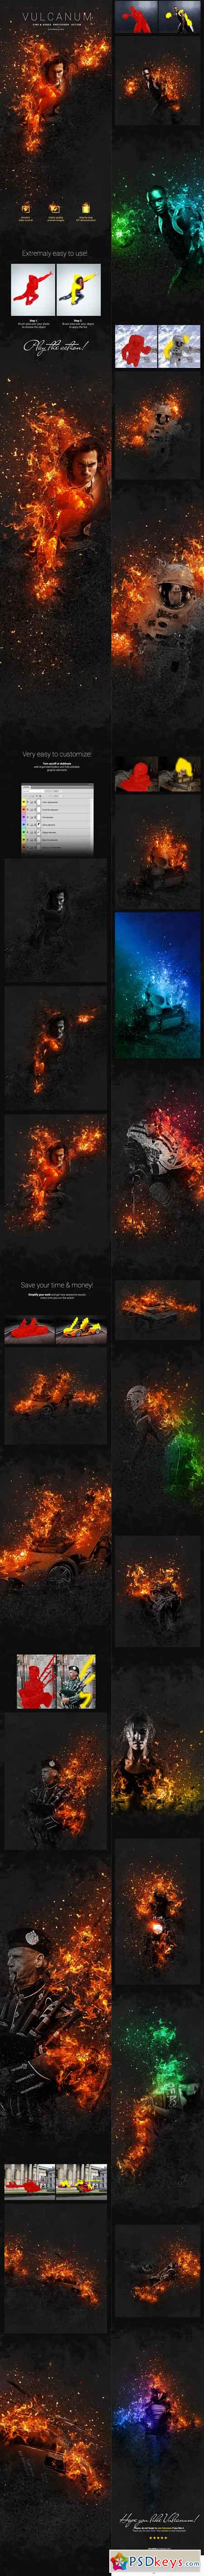 Vulcanum - Fire & Ashes Photoshop Action 16087227